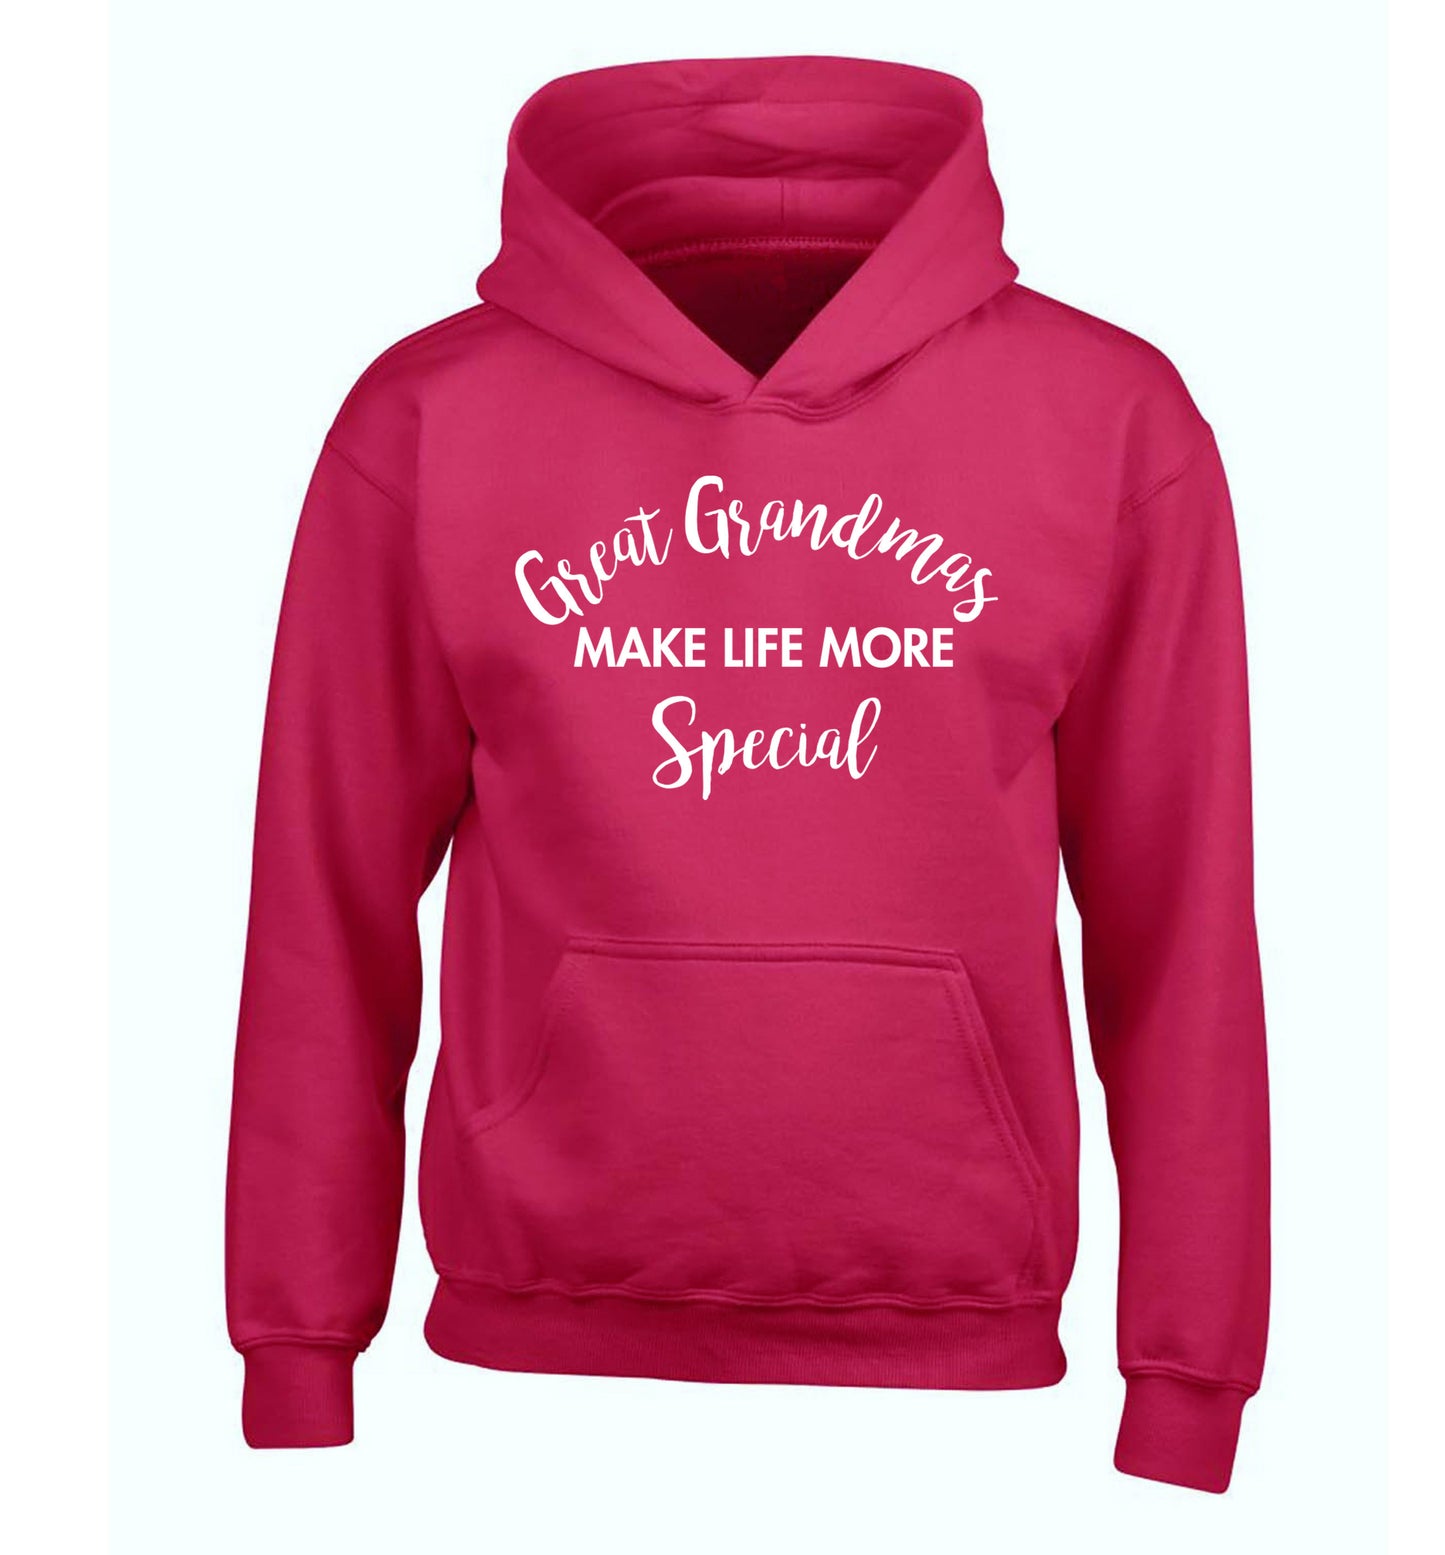 Great Grandmas make life more special children's pink hoodie 12-14 Years